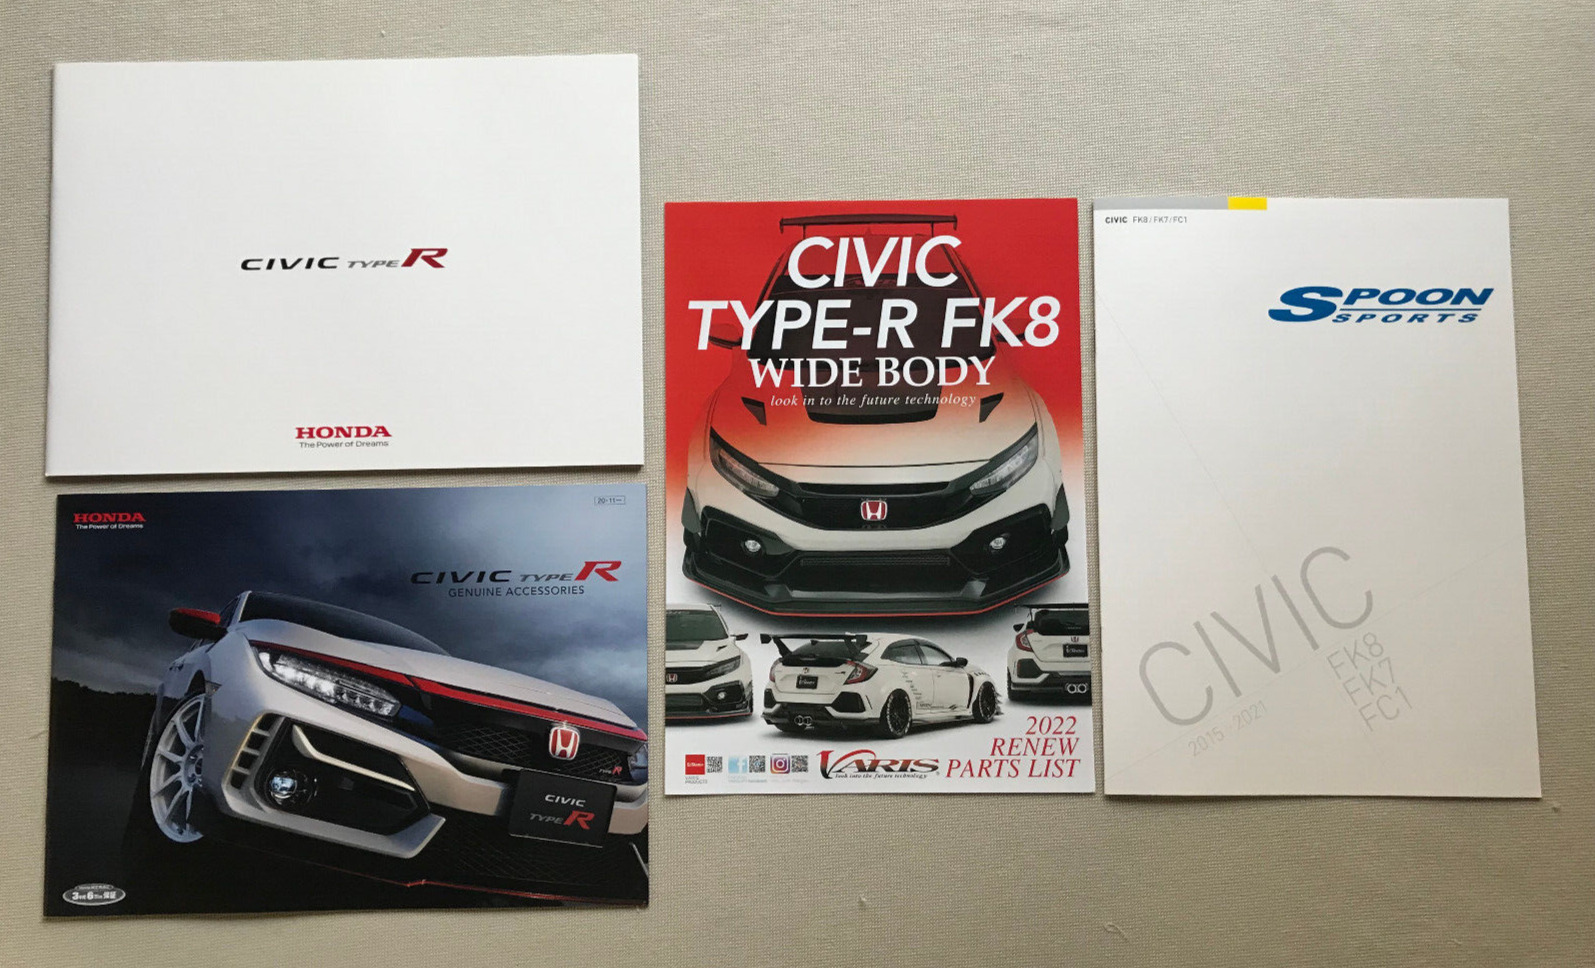 2021 Honda Civic Type R Brochure & Accessories & Spoon Sports Catalog Varis Set